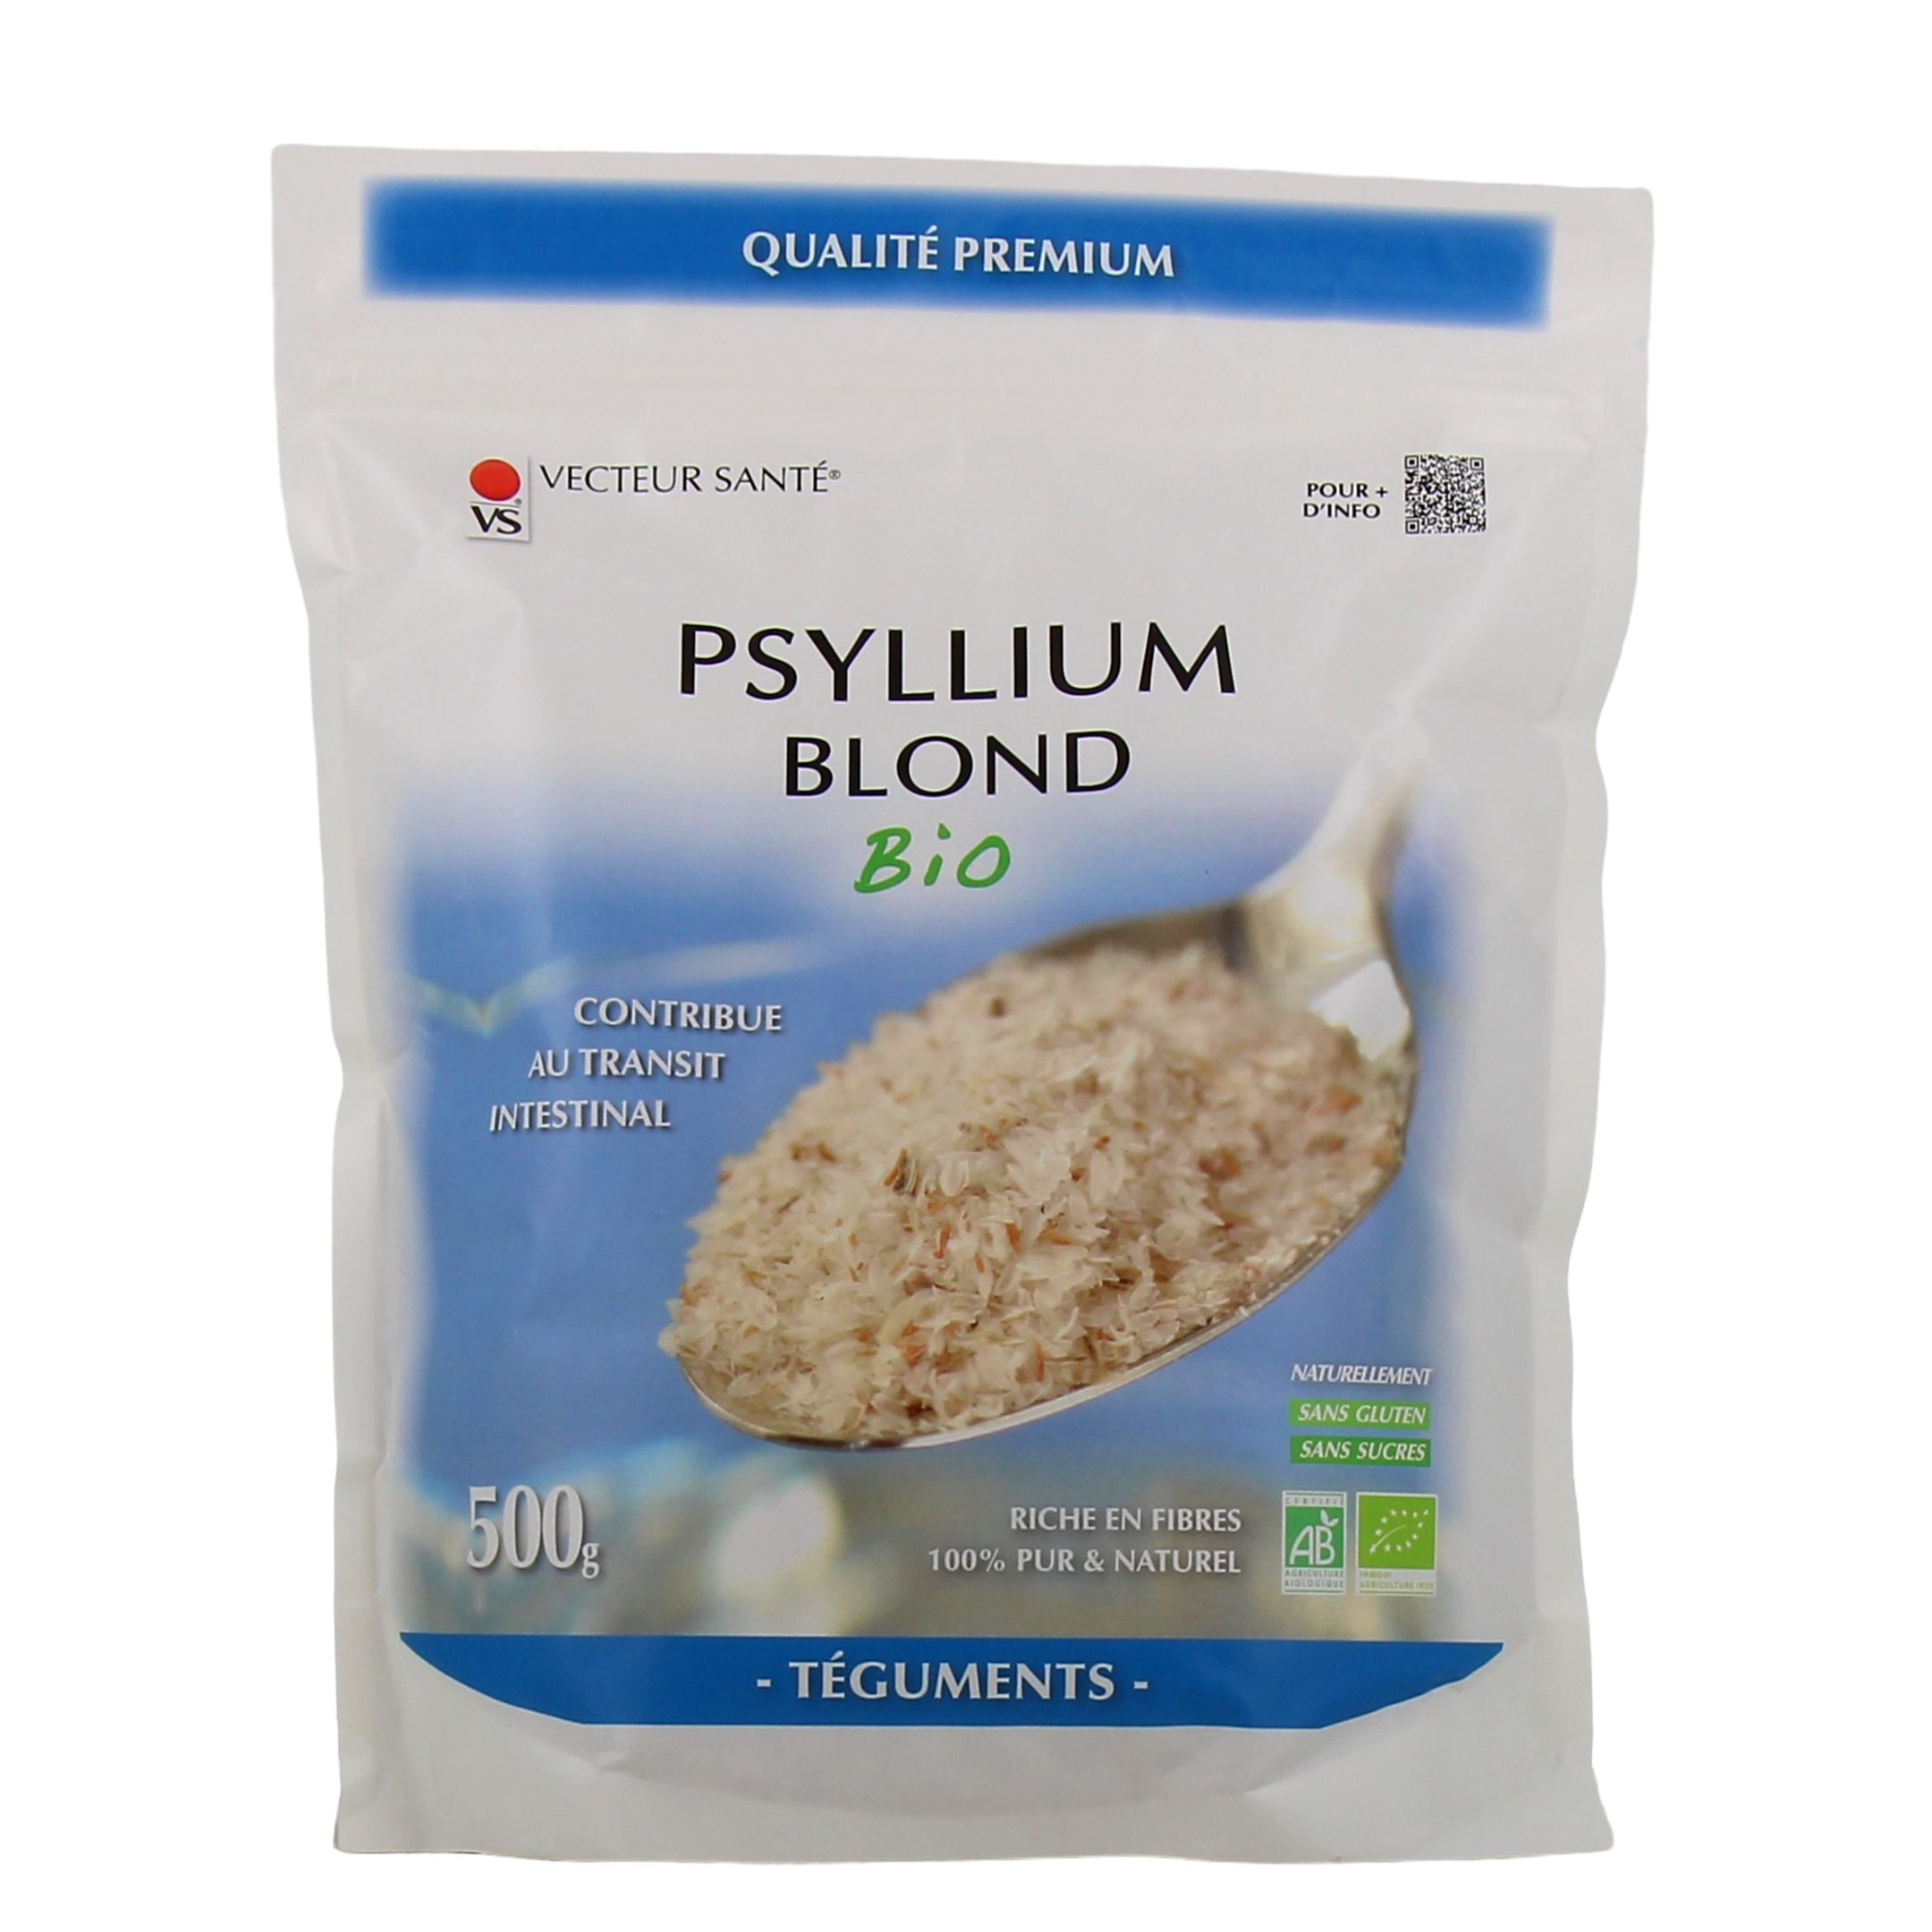 Téguments de Psyllium blond Bio 250g